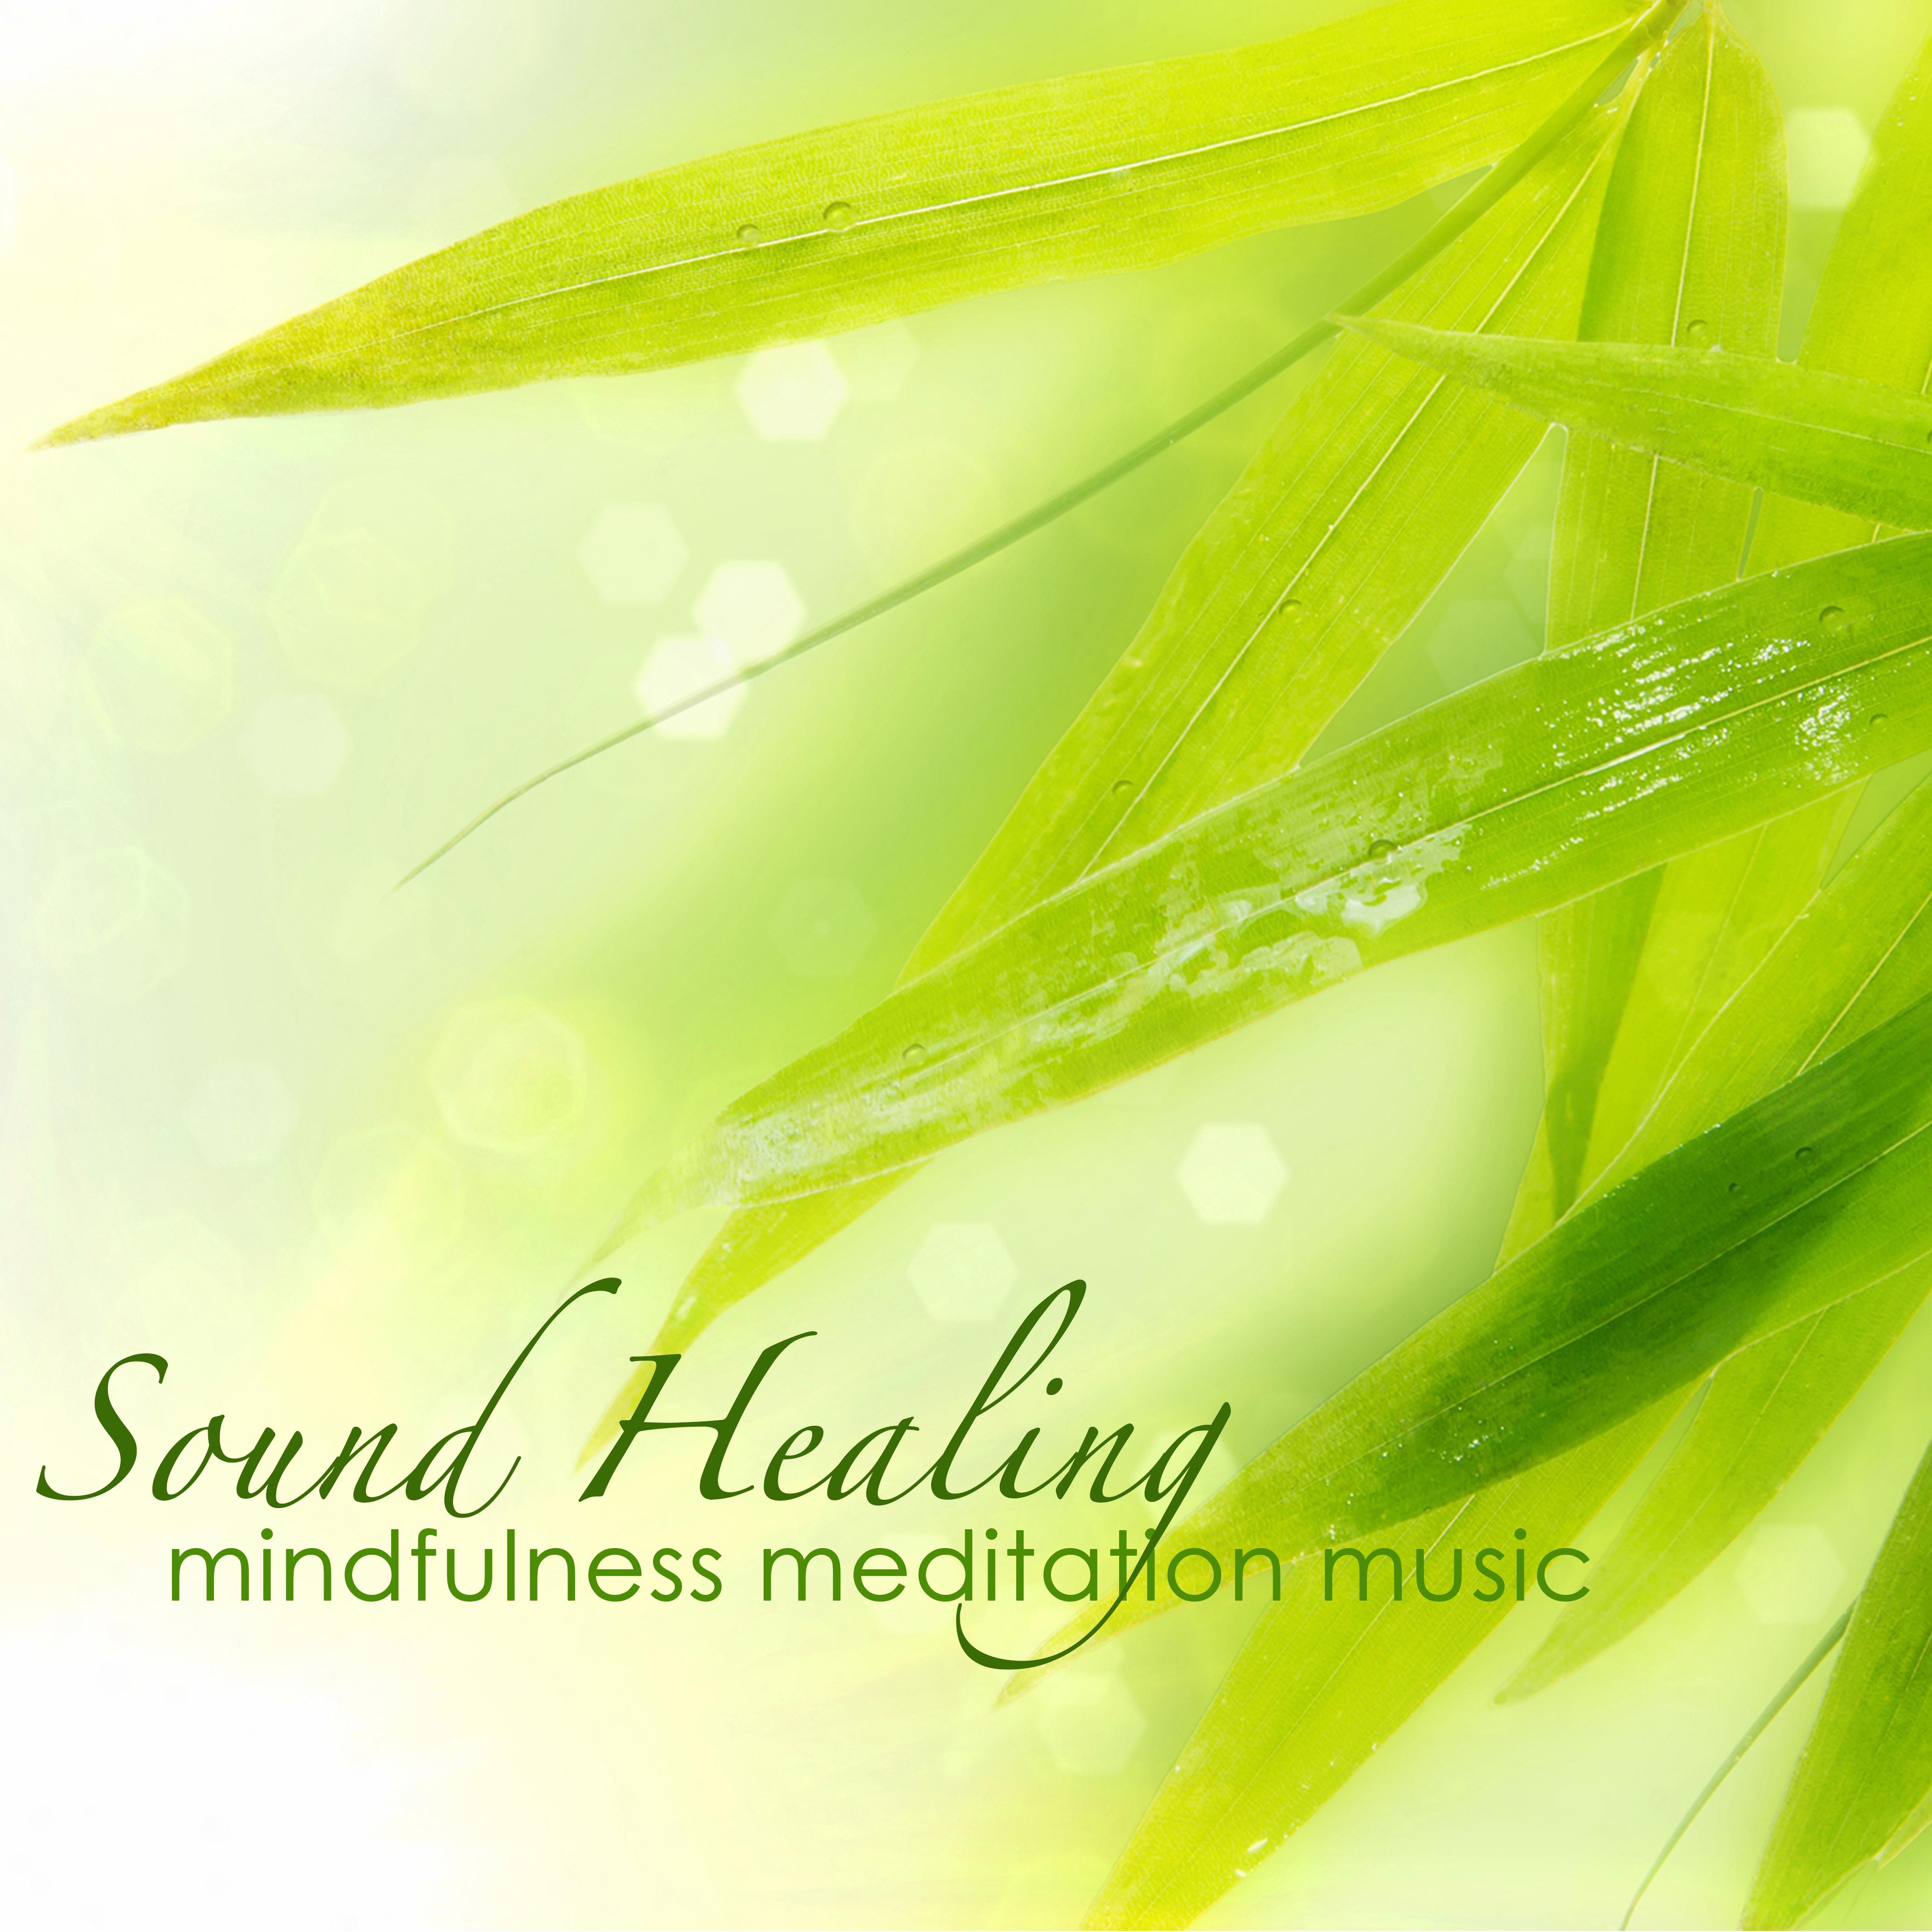 Sound Healing Mindfulness Meditation Music – Zen Nature Music for Deep Meditation and Pranayama Breathing